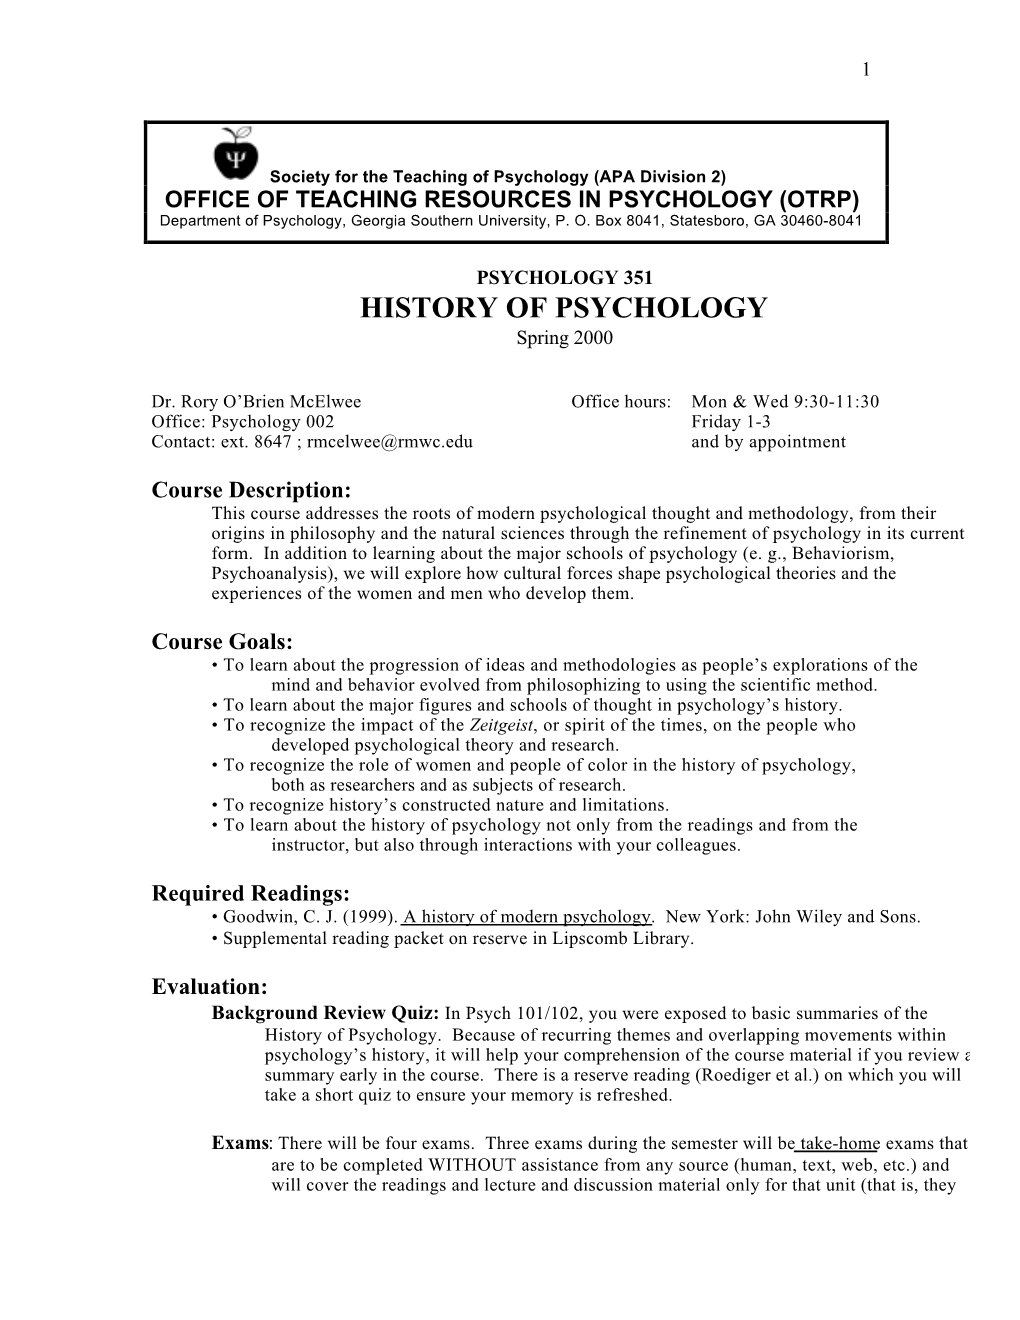 HISTORY of PSYCHOLOGY Spring 2000